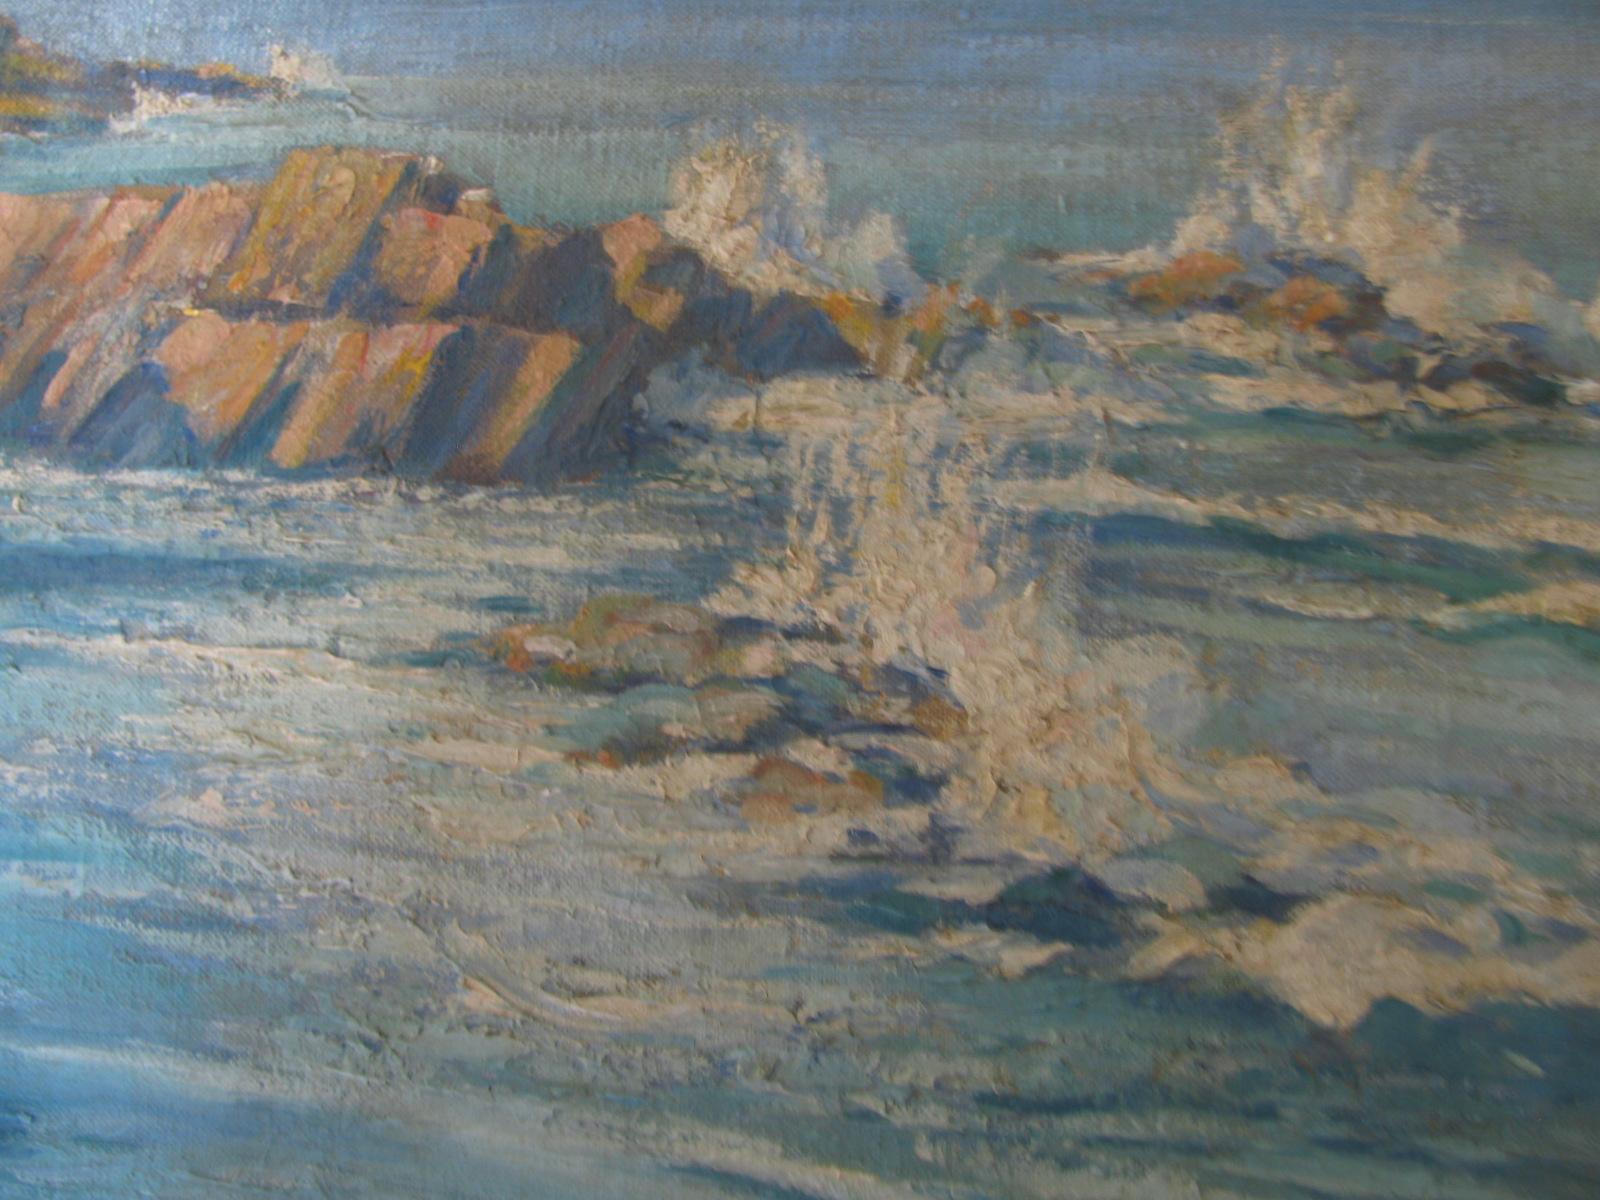 Brushed Oil on Board Seascape by Maine Artist Charles Andrew Hafner, 1937